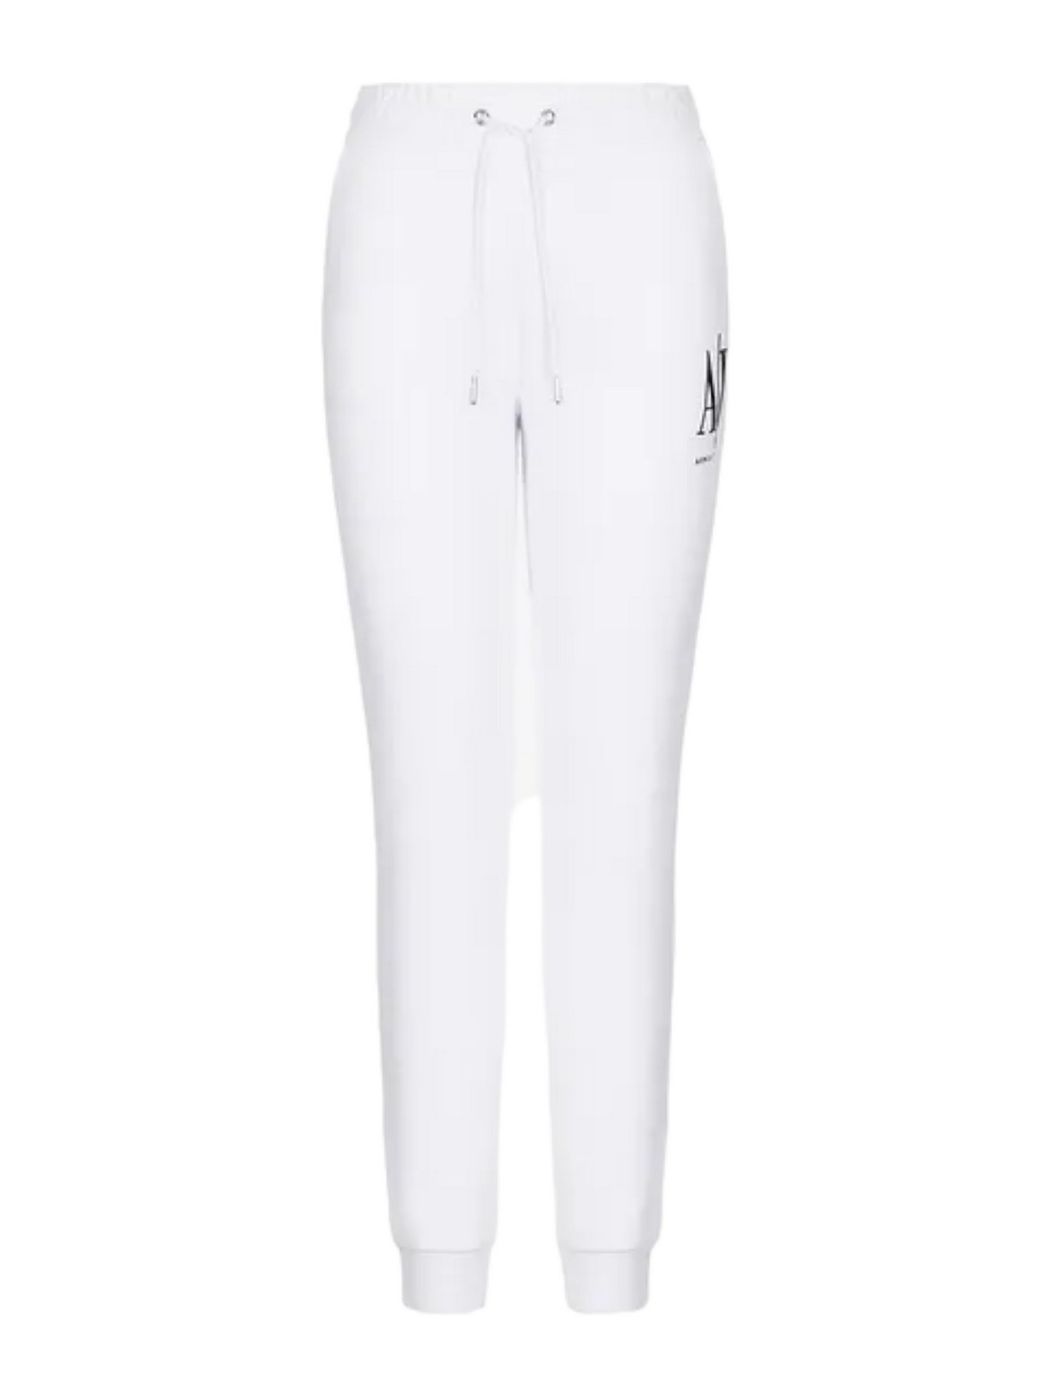 ARMANI EXCHANGE Pantalone Donna  8NYPCX YJ68Z Bianco